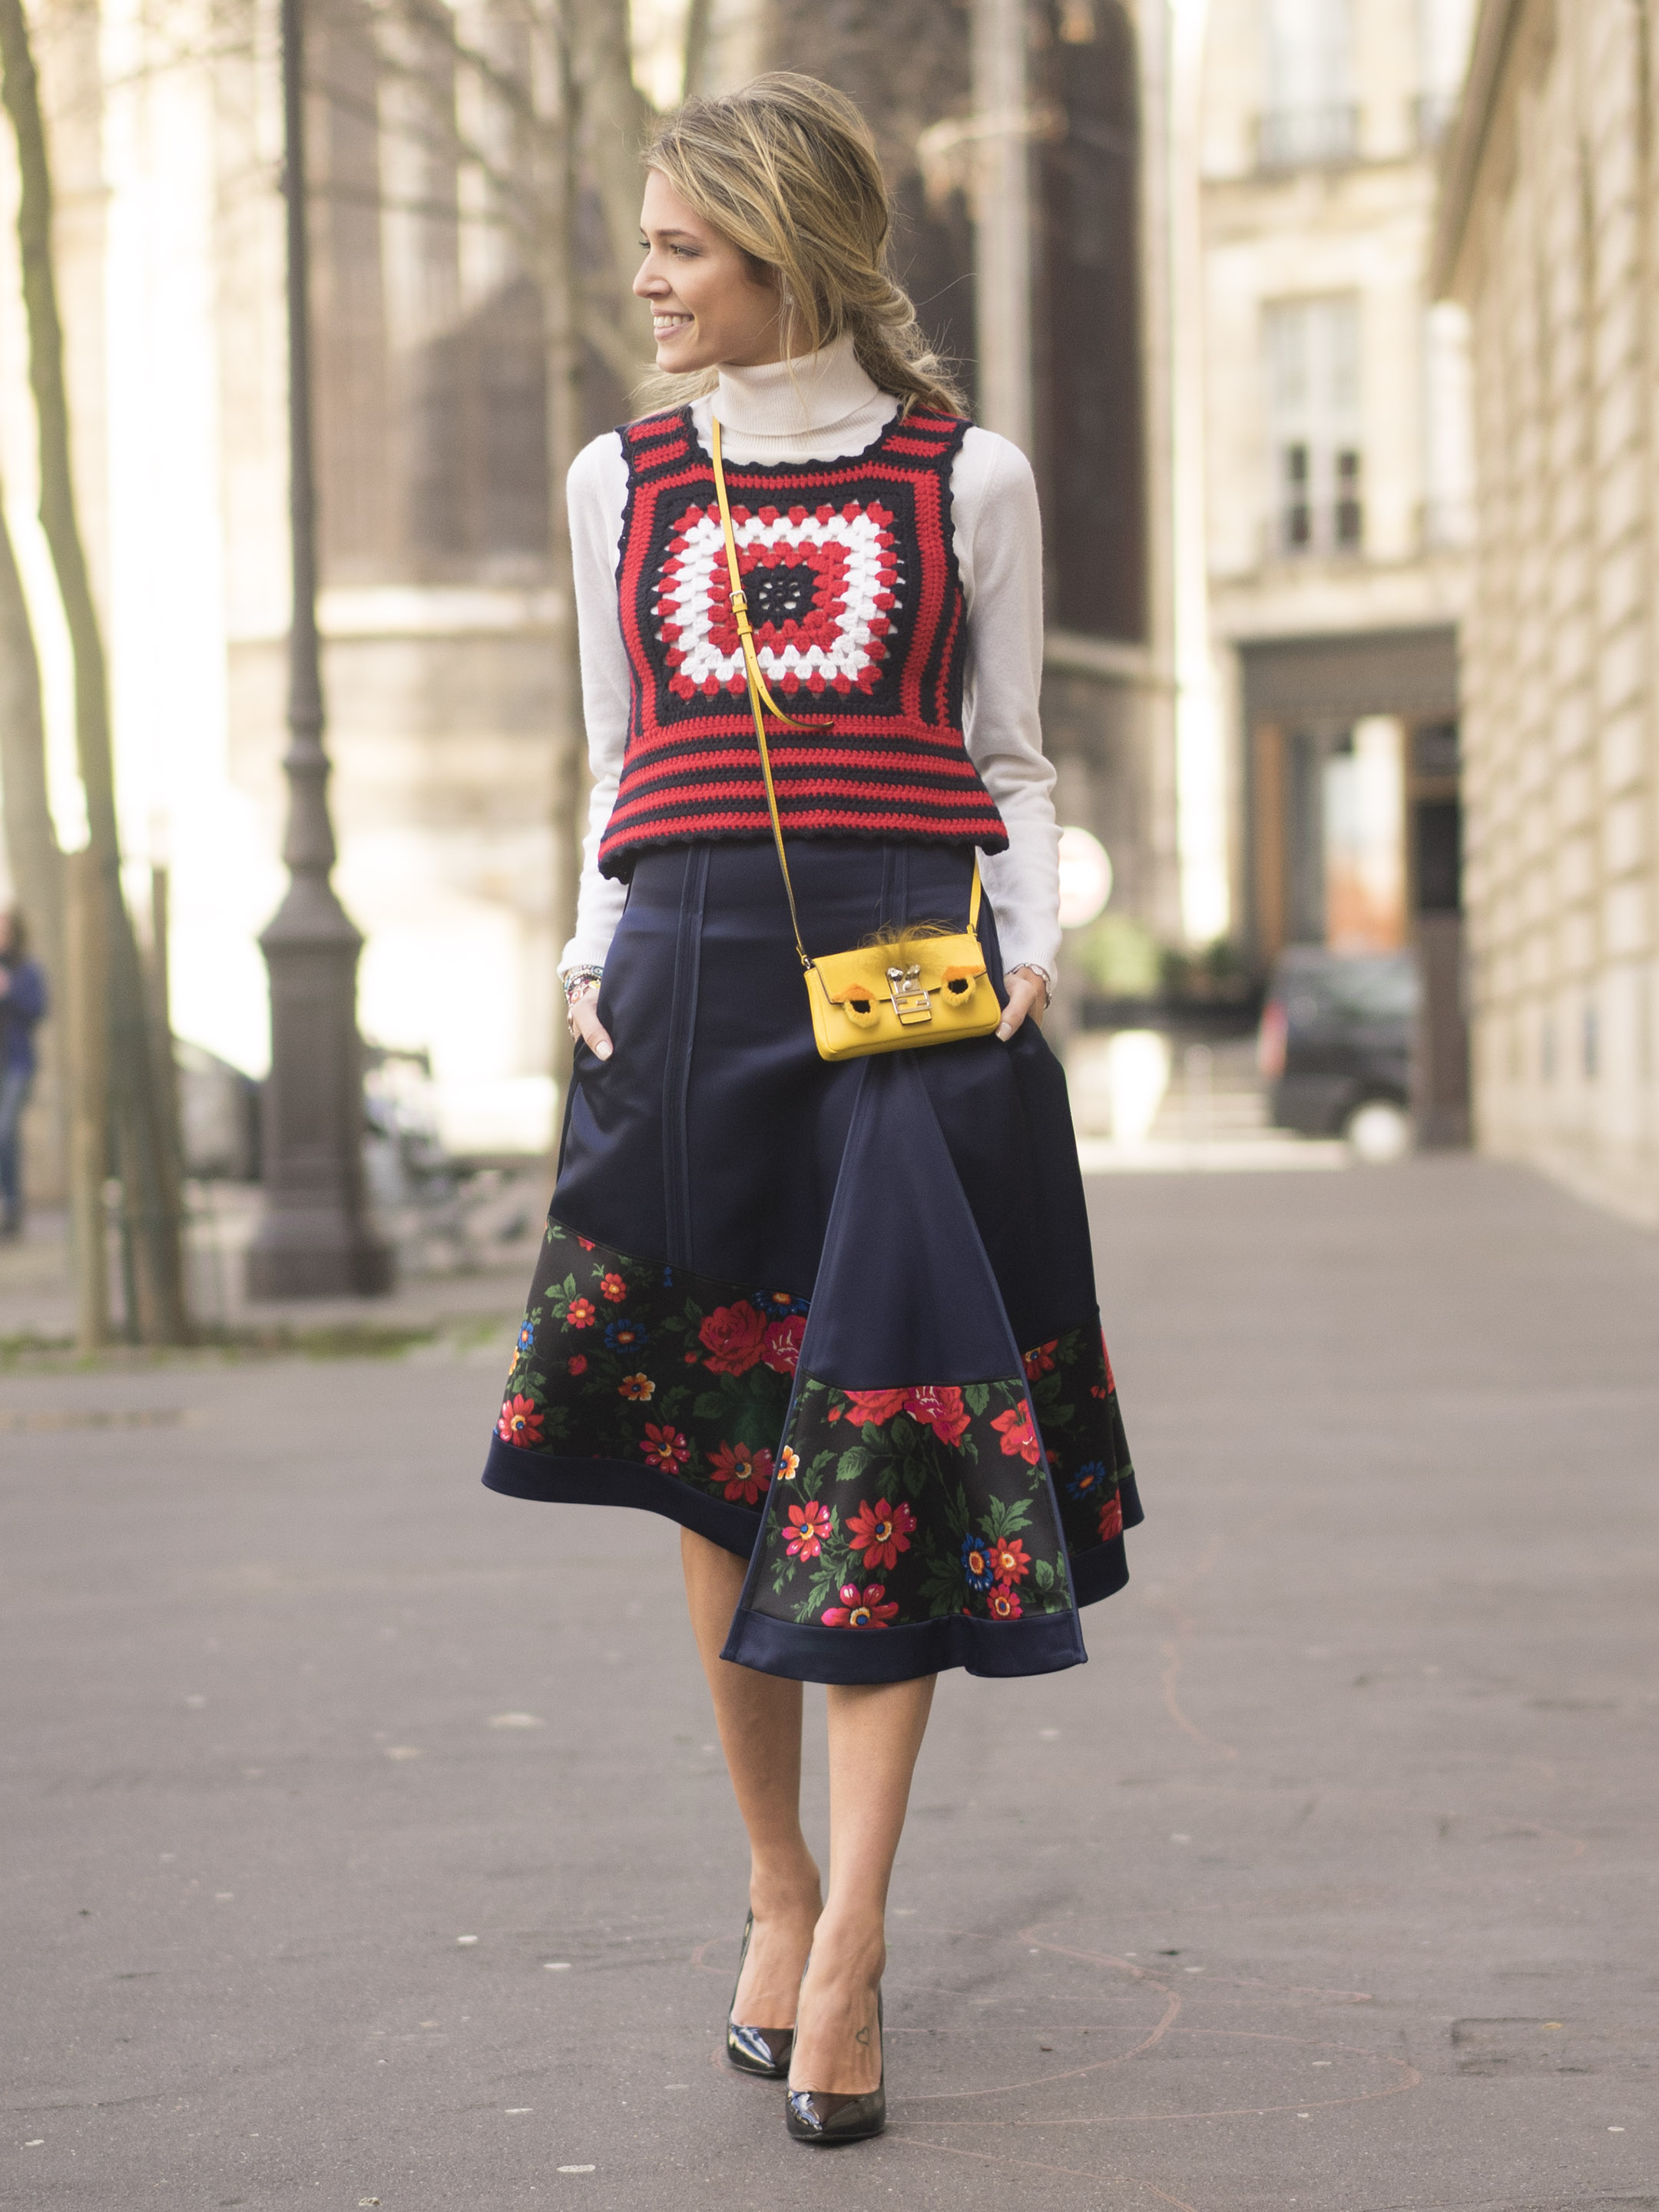 Bag at You - Helena Bordon - Paris Fashion Week